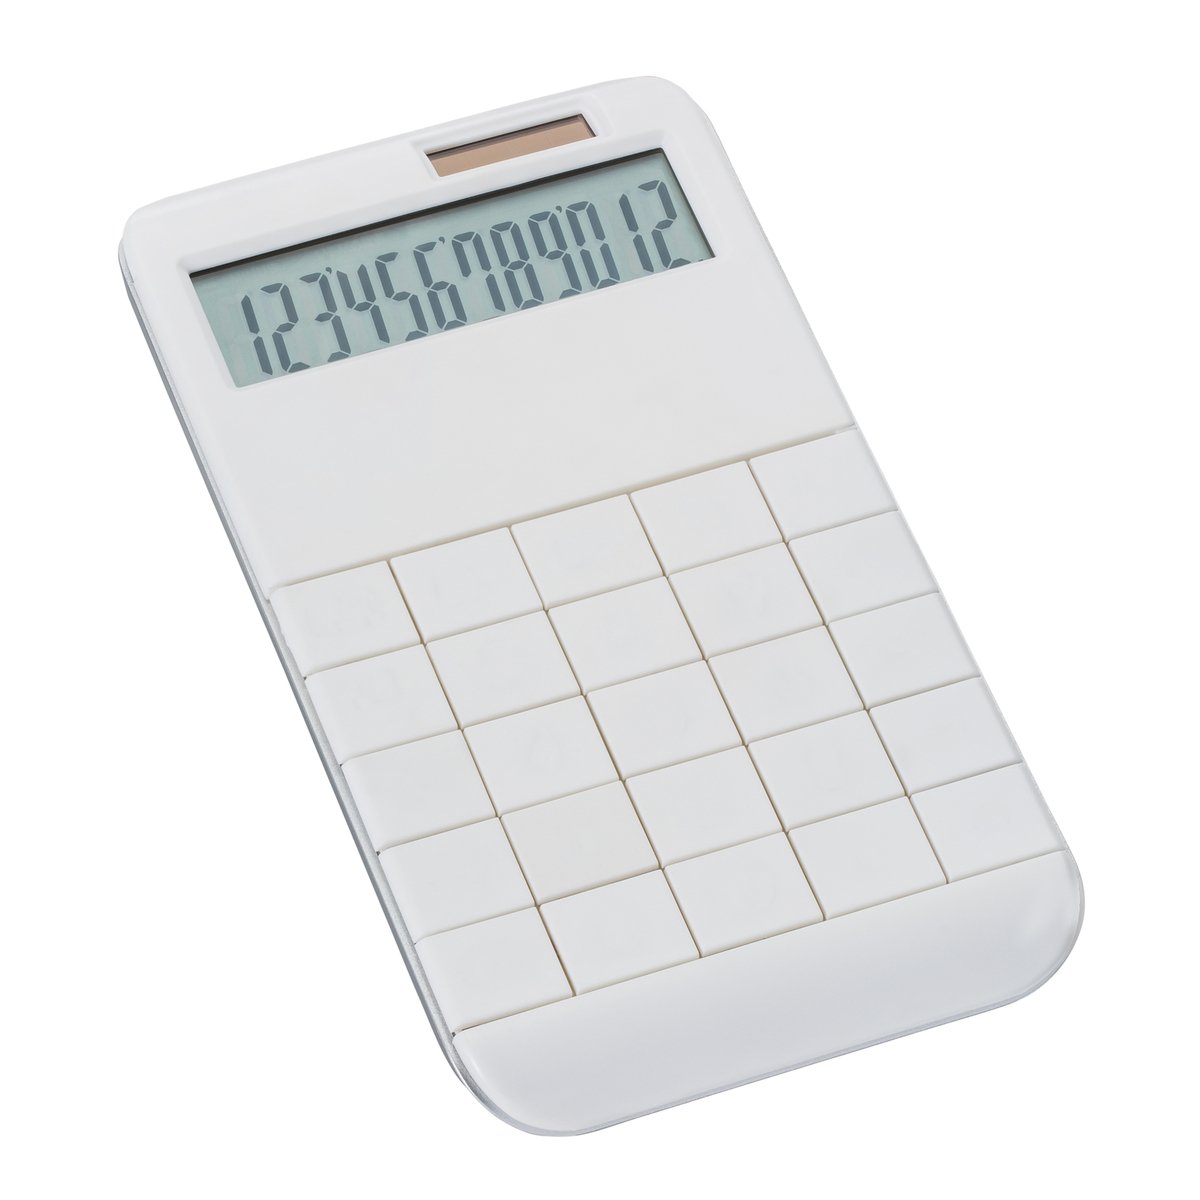 Solar calculator REEVES-SPECTACULATOR white